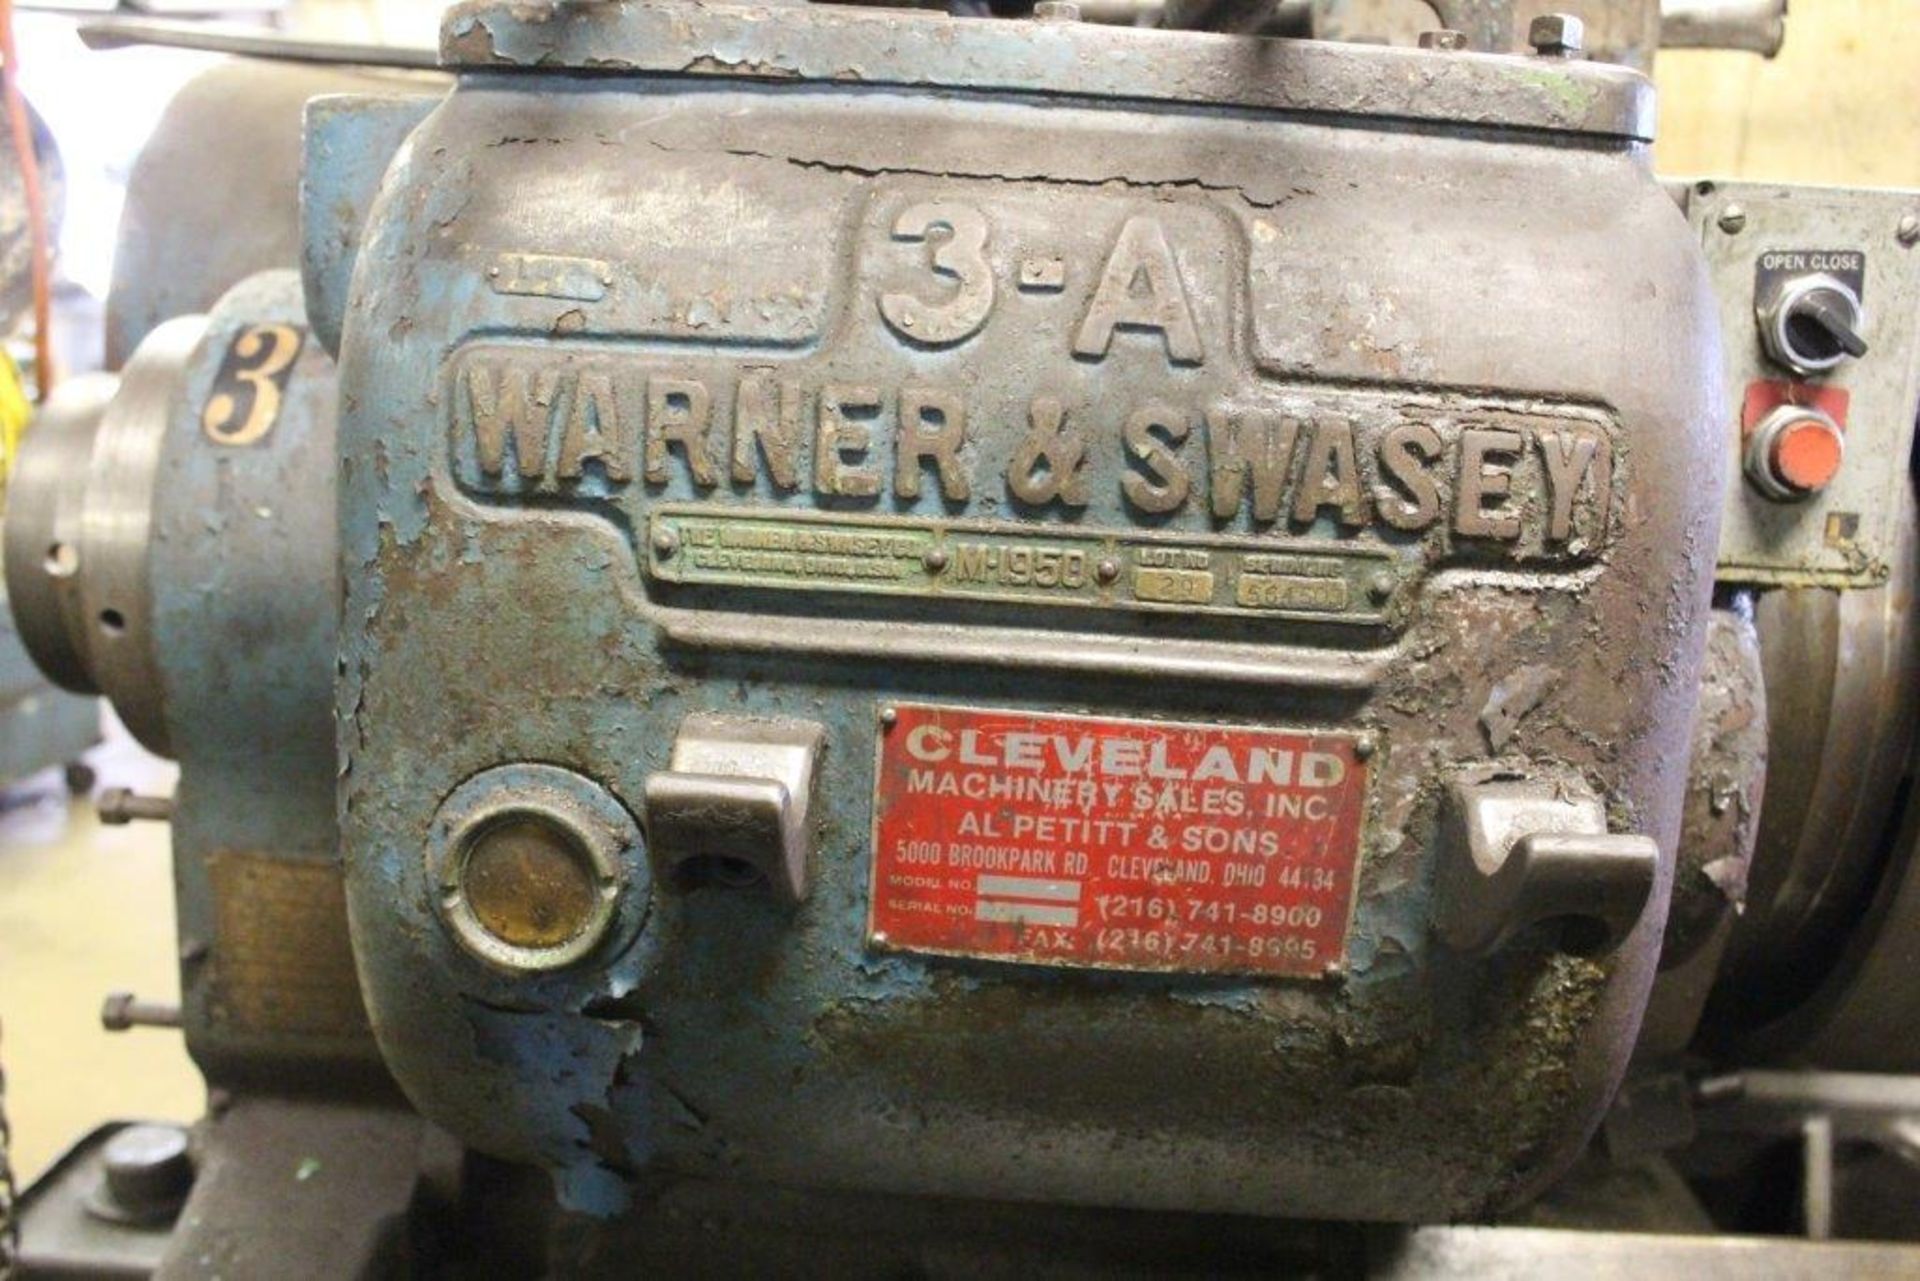 Warner Swasey Turrent Lathe- 22" swing, 3'bed - Image 4 of 8